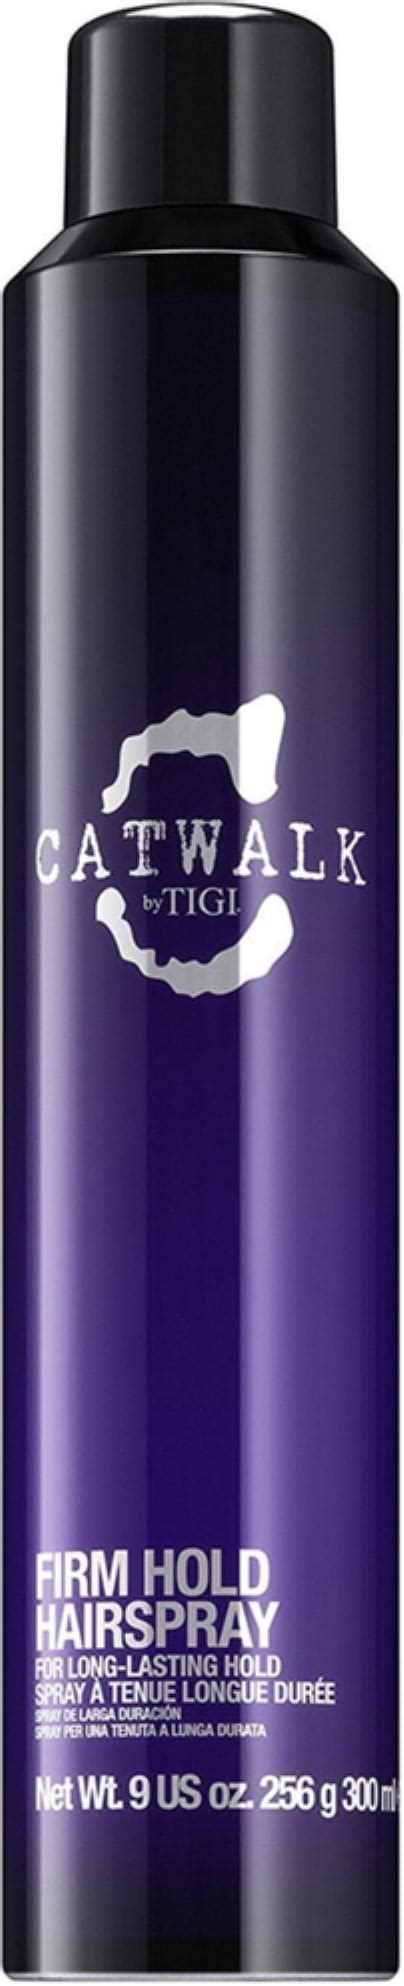 Tigi Catwalk Firm Hold Hair Spray Oz Walmart Com